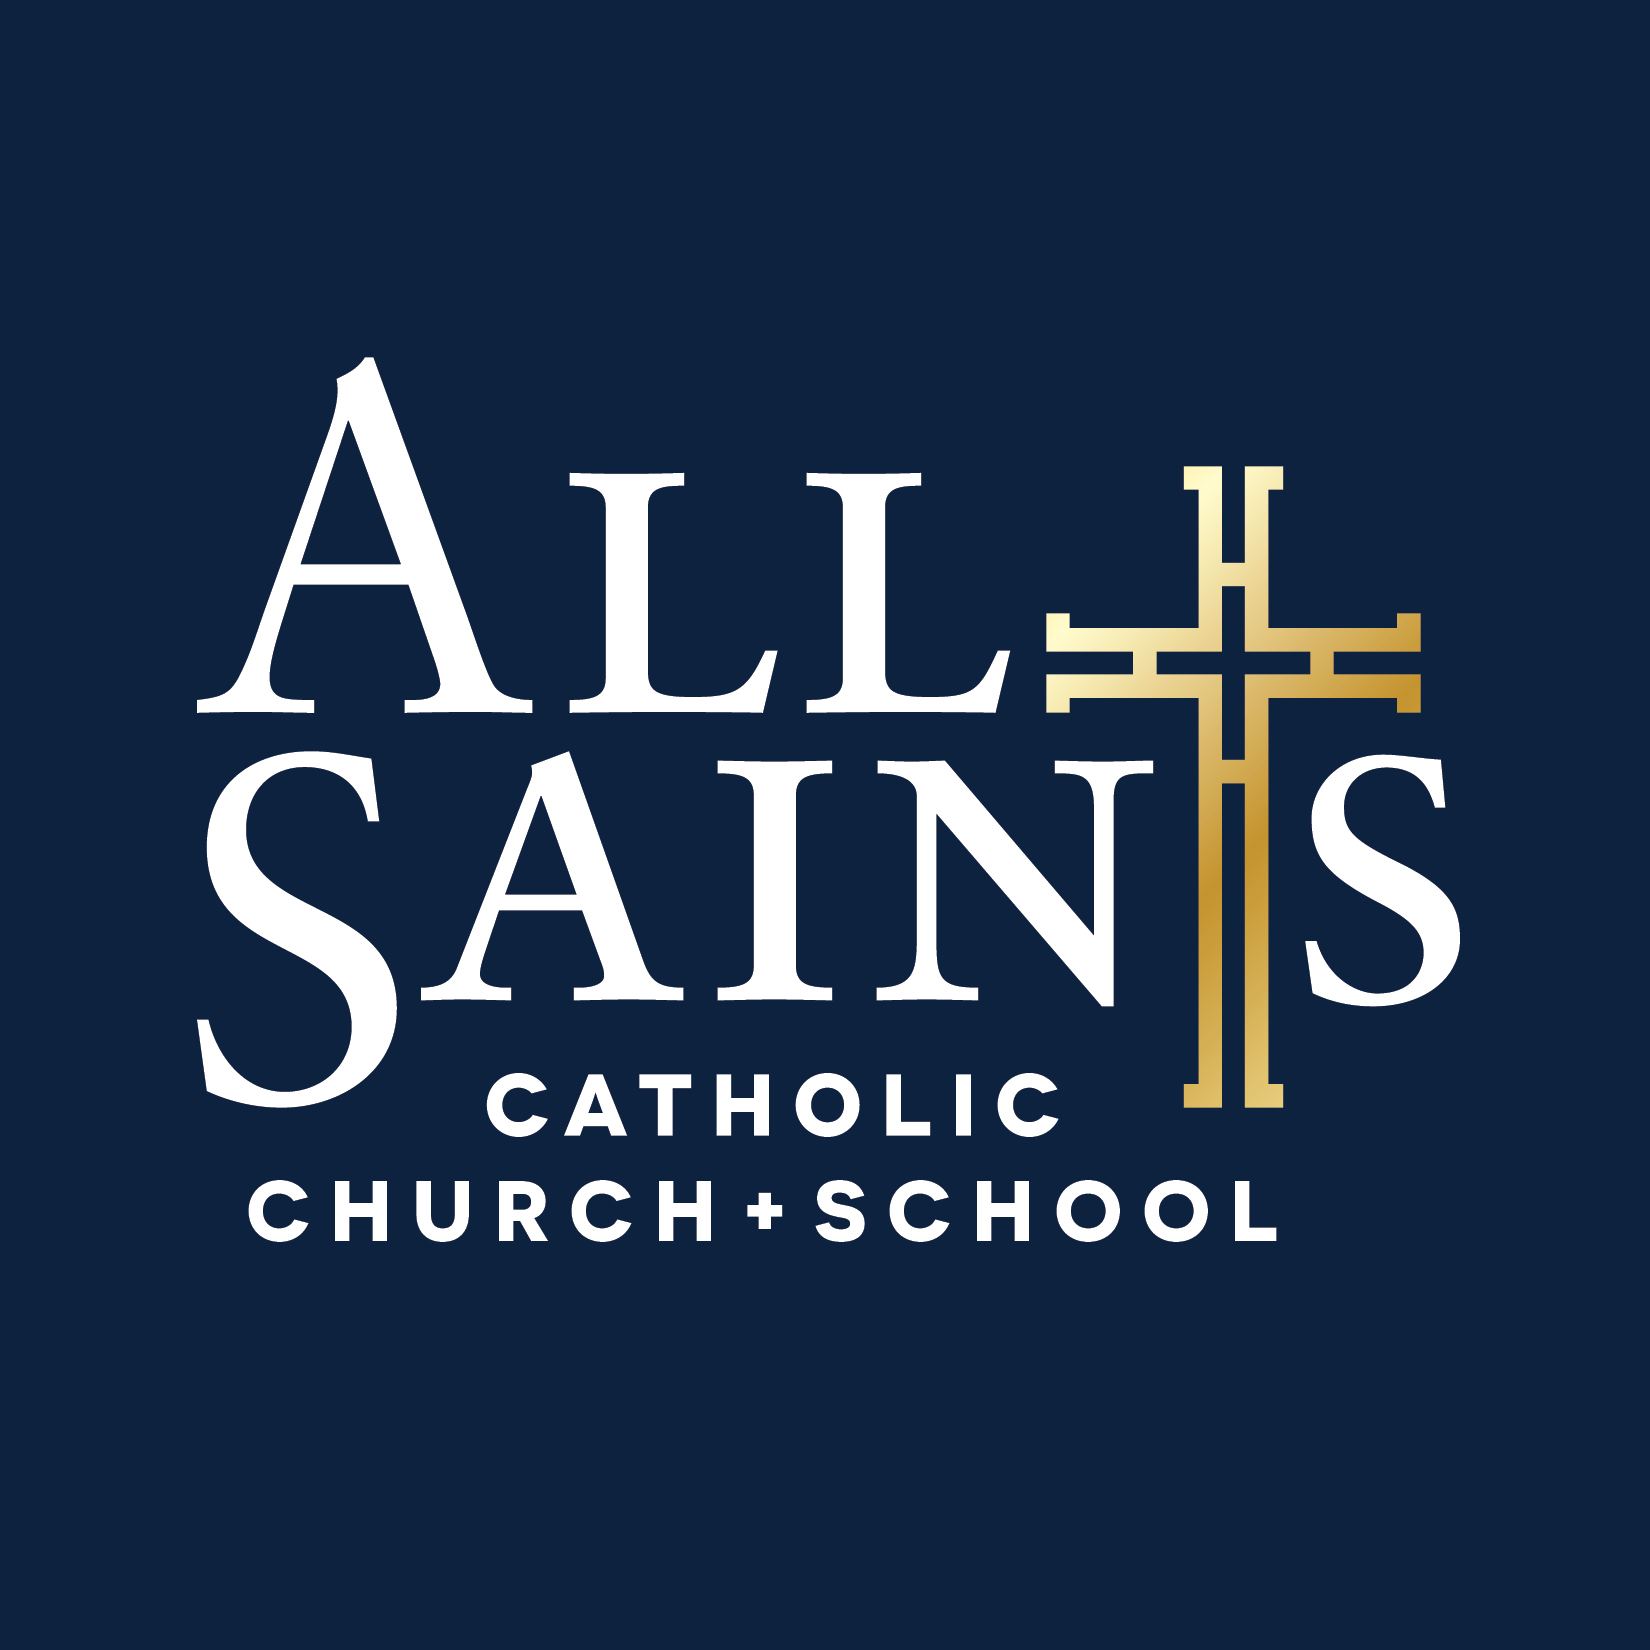 All Saints Catholic Church & School Company Logo